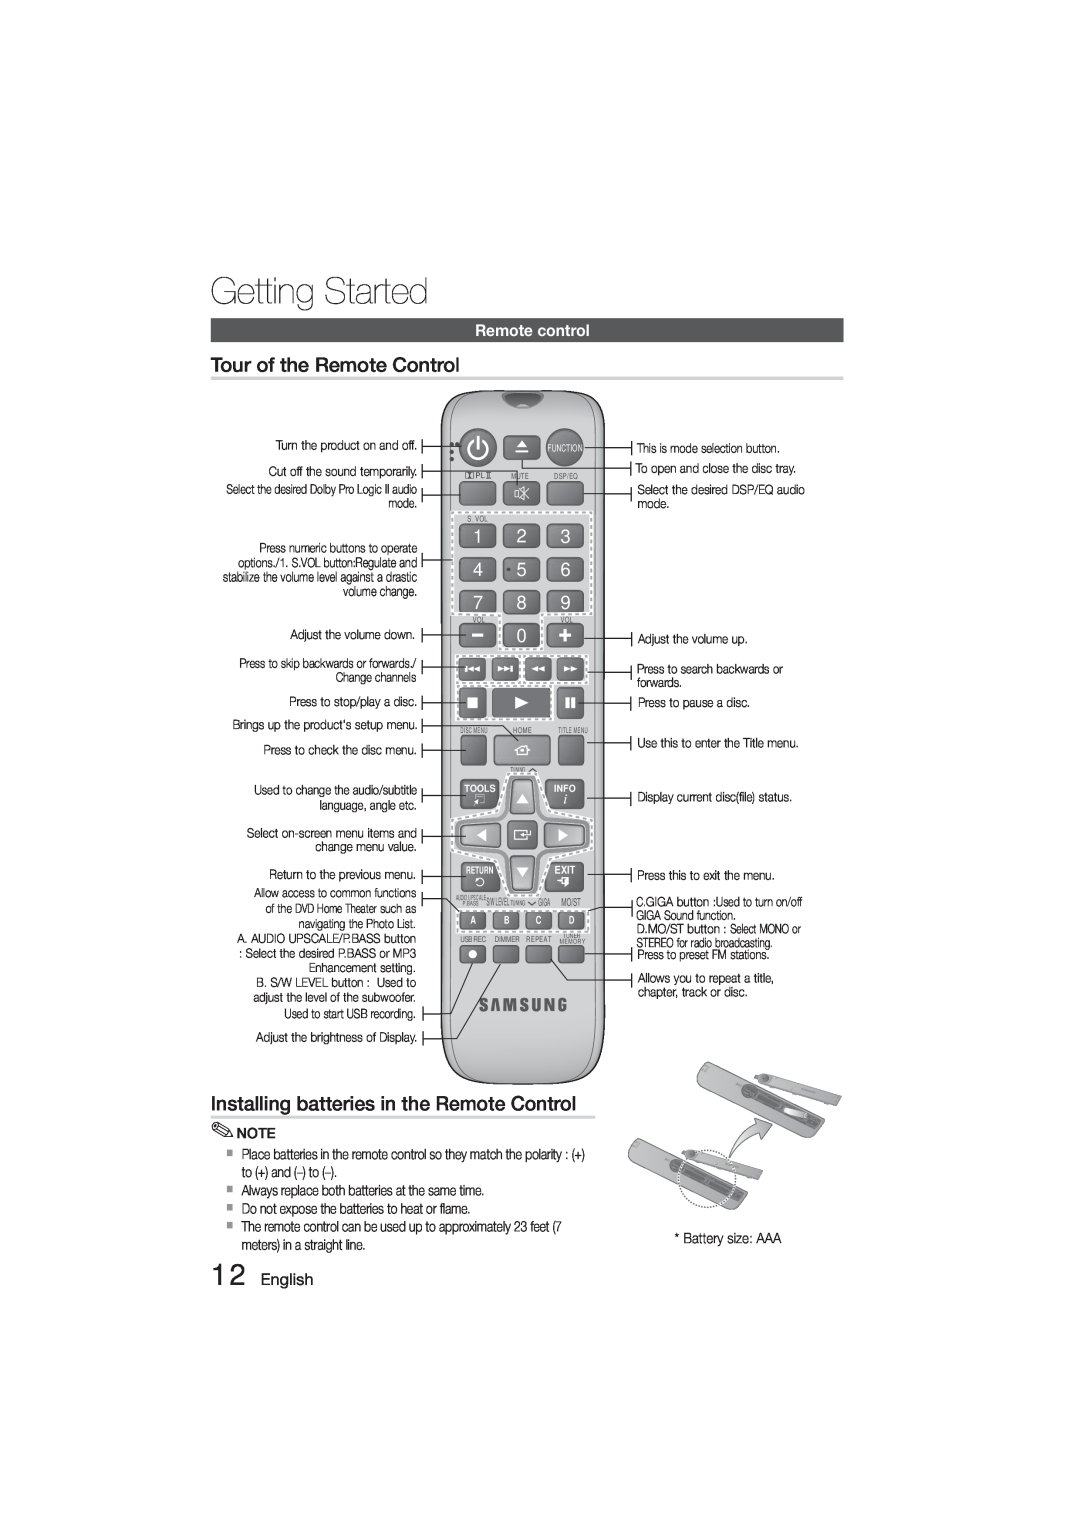 Samsung HT-E350, HT-355 Tour of the Remote Control, Installing batteries in the Remote Control, Remote control, English 